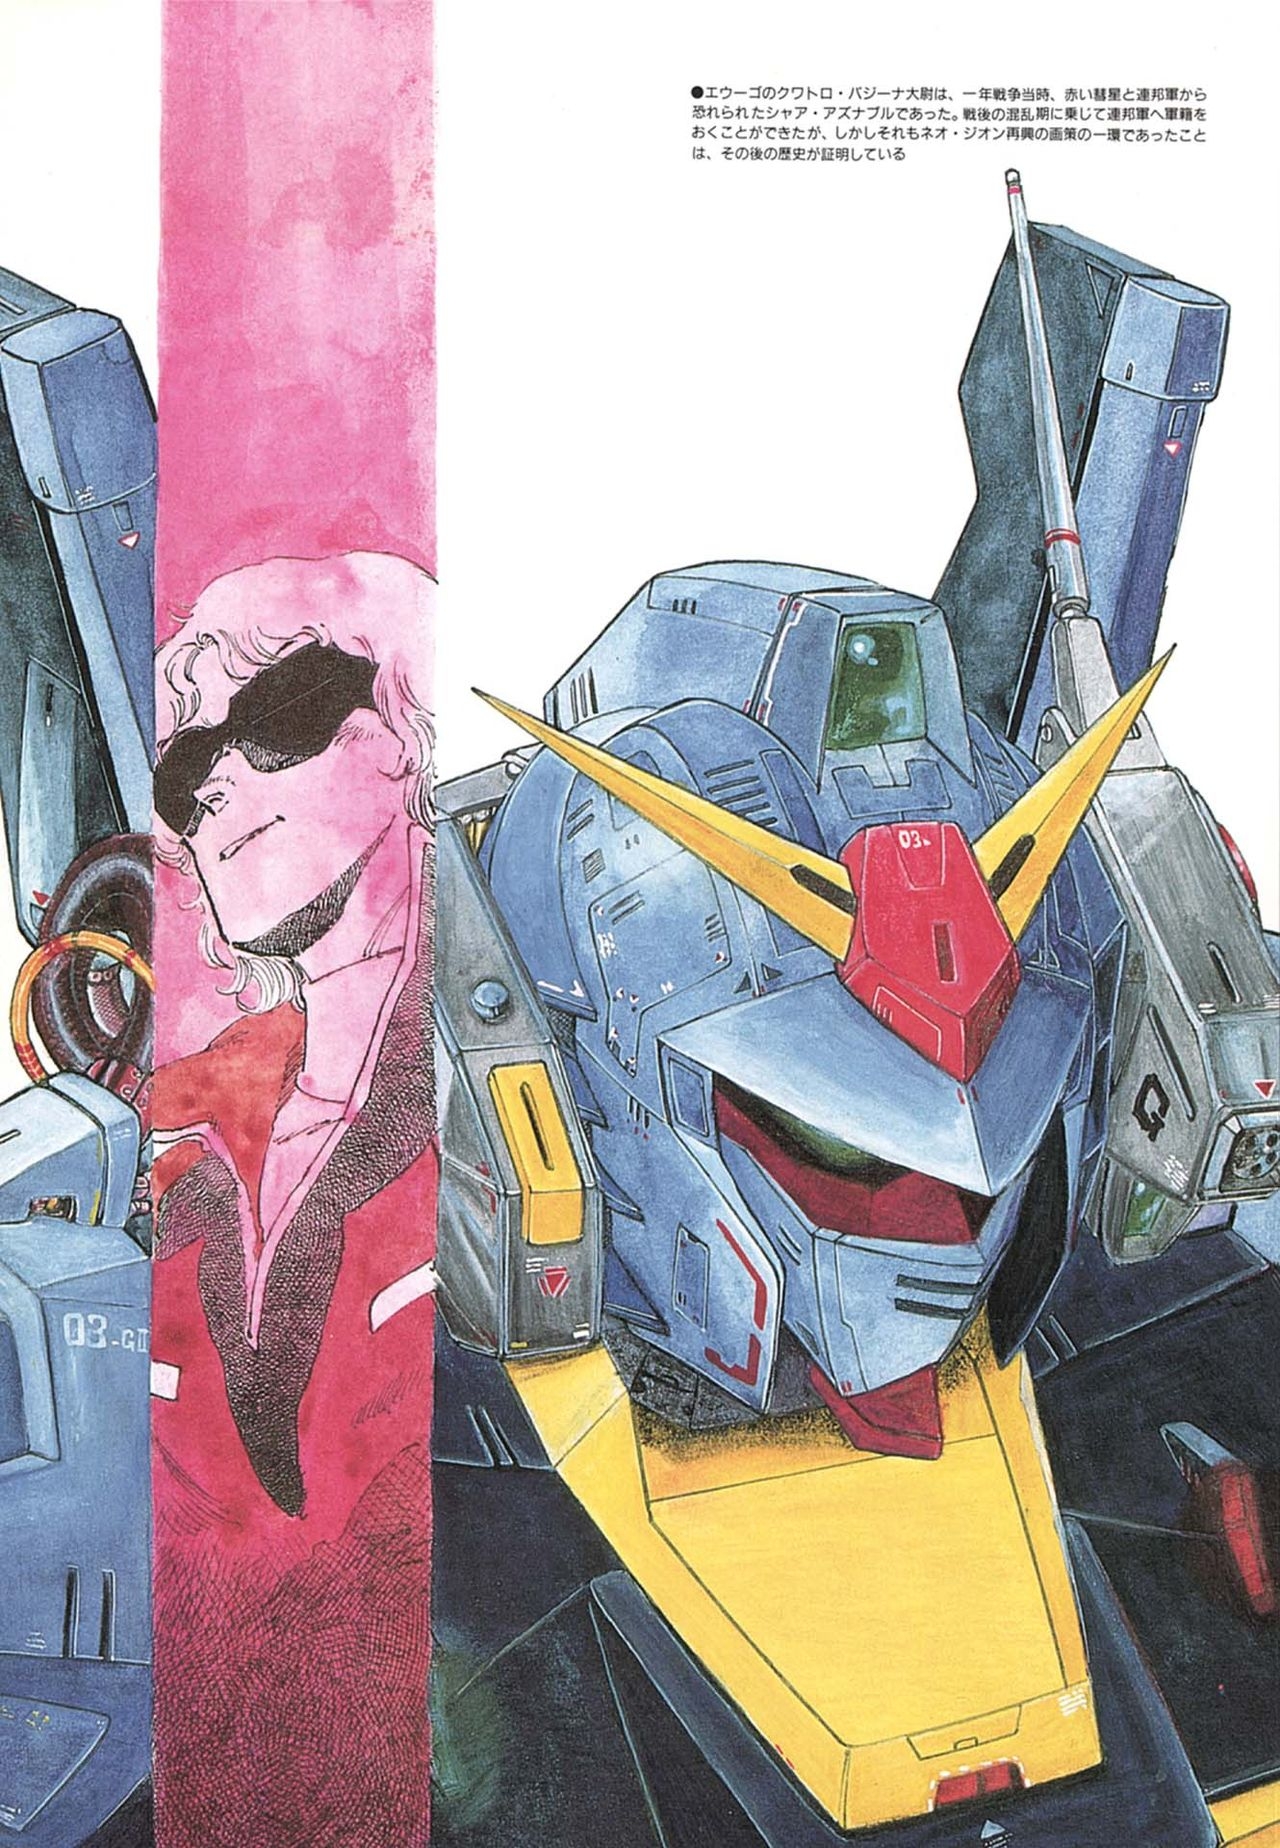 [Kazuhisa Kondo] Kazuhisa Kondo 2D & 3D Works - Go Ahead - From Mobile Suit Gundam to Original Mechanism 47